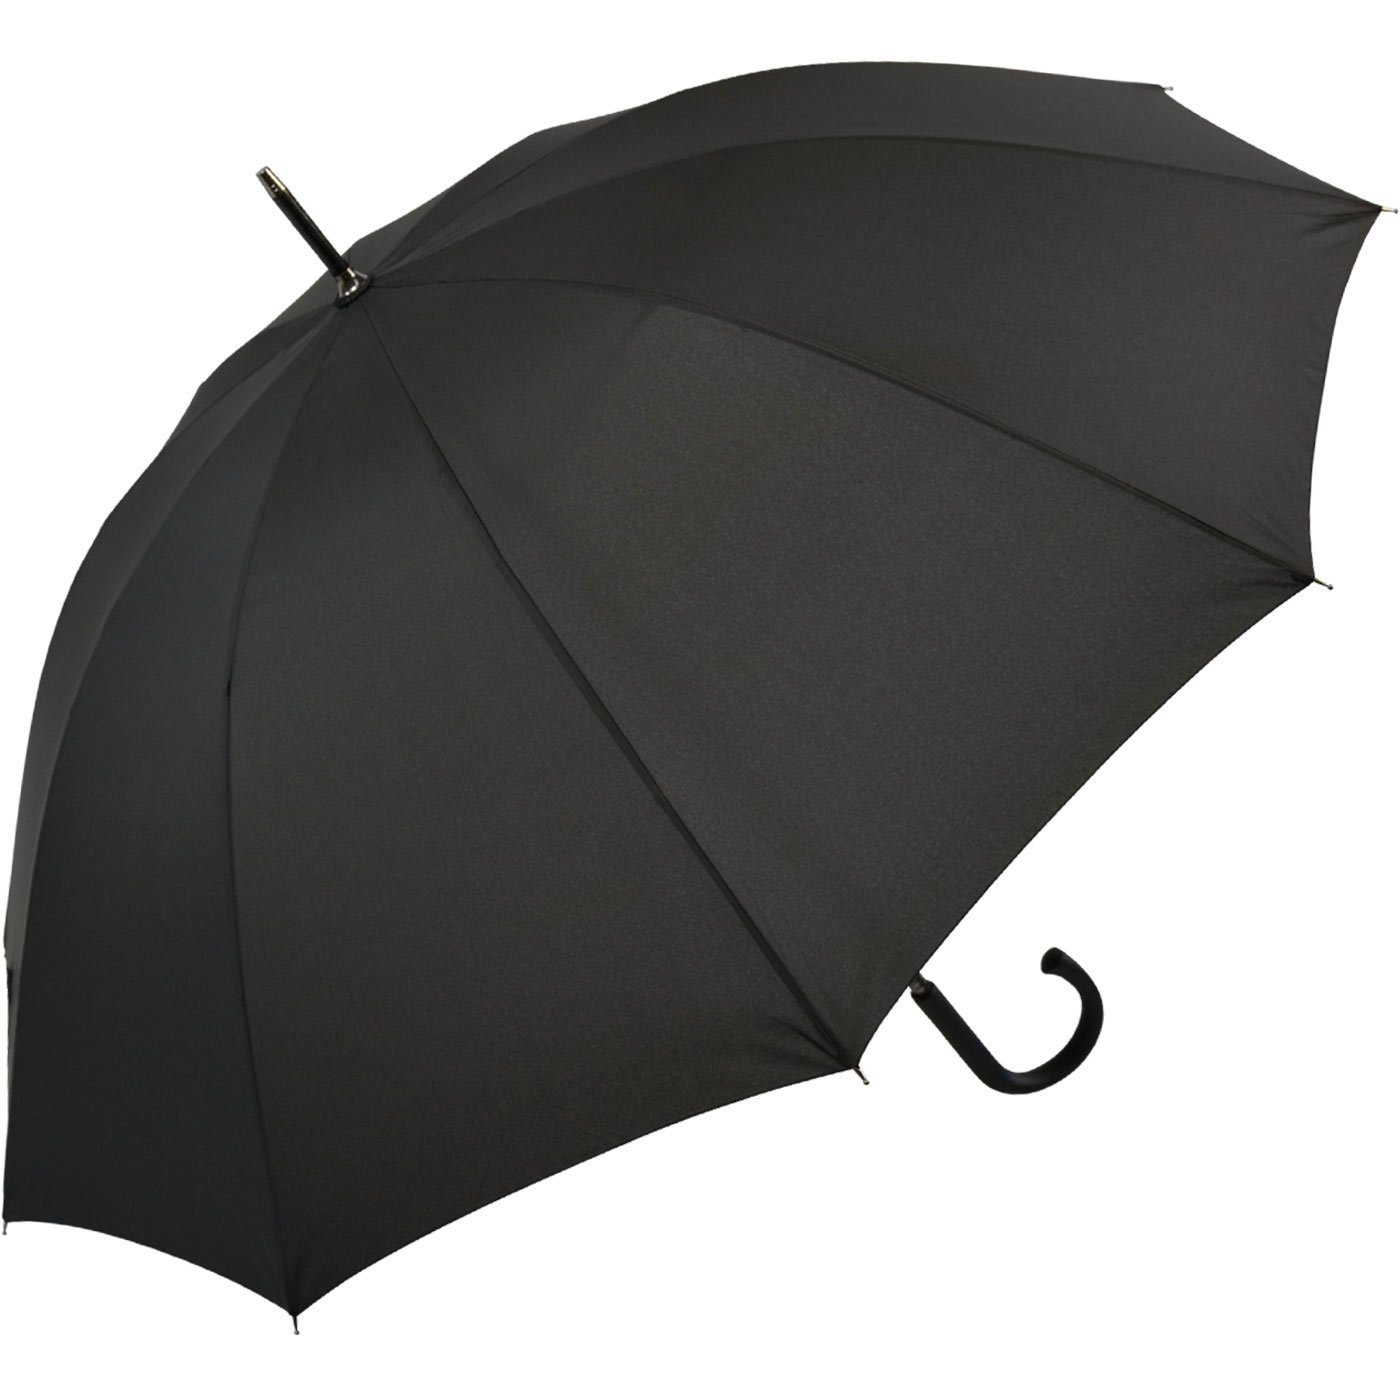 für besonders zwei Partnerschirm Schirm Fiberglas RHG, XXL Impliva schwarz Personen 10-teilig Regenschirm stabiler Falcone®